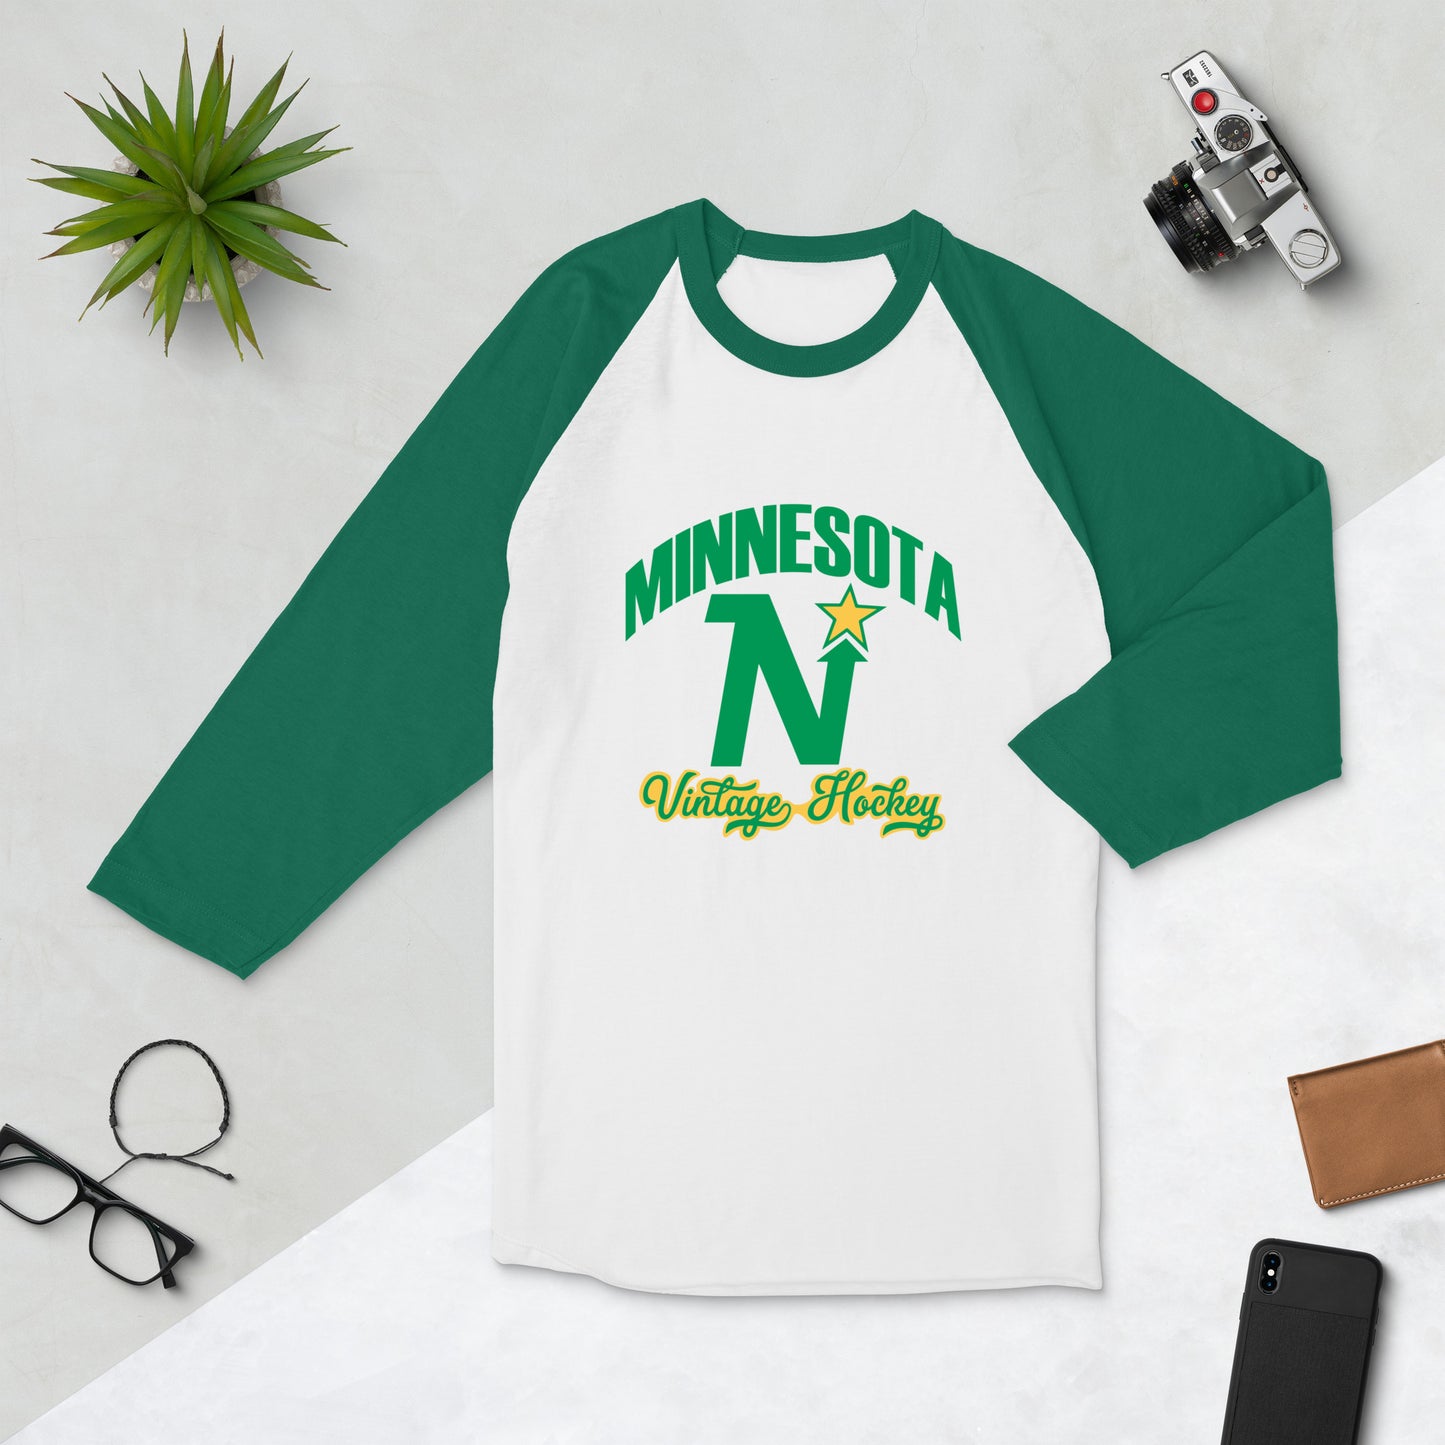 Minnesota Vintage Hockey 3/4 Sleeve Raglan Shirt - White/Kelly